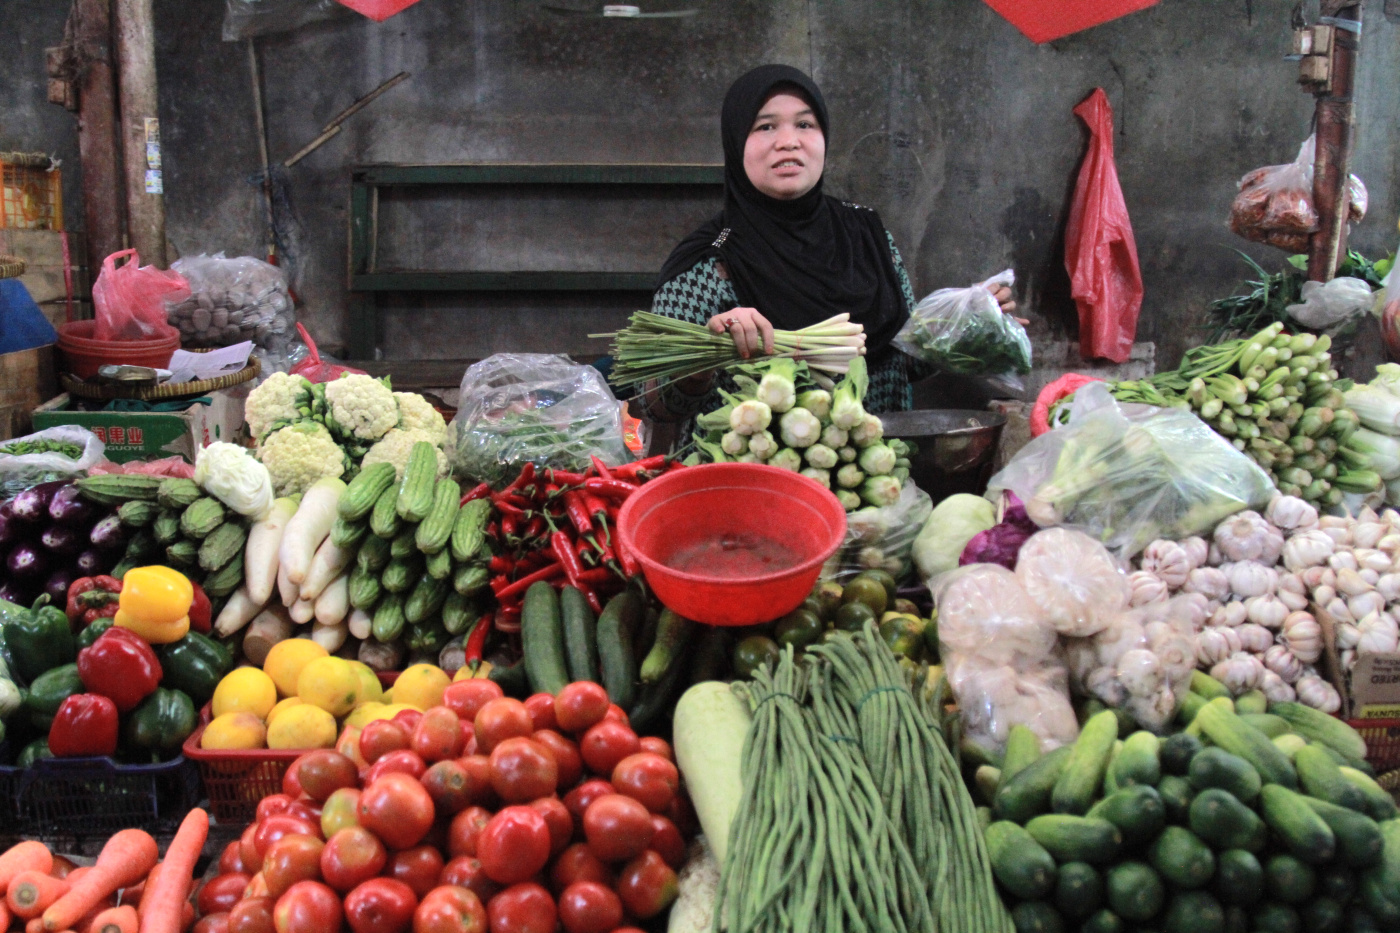 Jelang bulan suci Ramadhan harga sembako mulai mengalami kenaikan di pasar tradisional Kebayoran Lama (Ashar/SinPo.id)